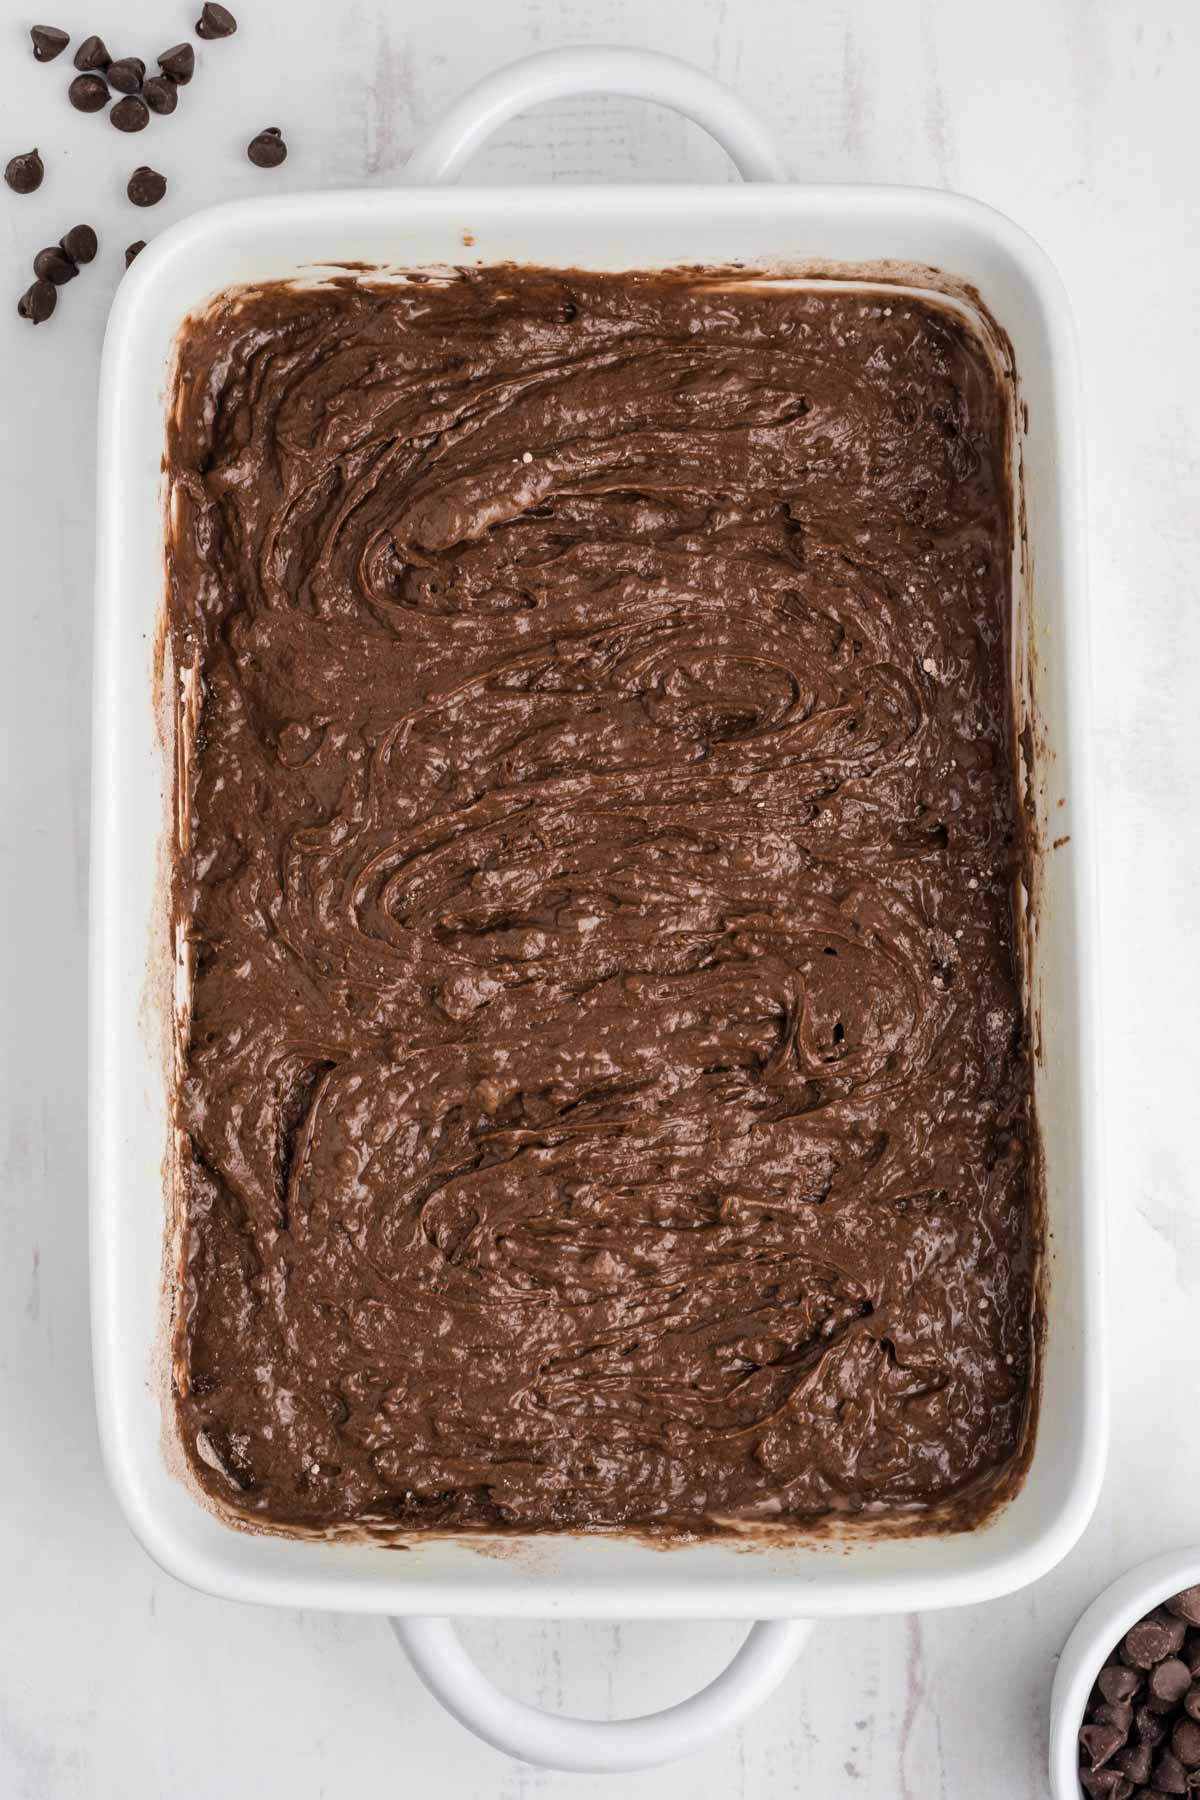 Chocolate dump cake mixture in the pan.